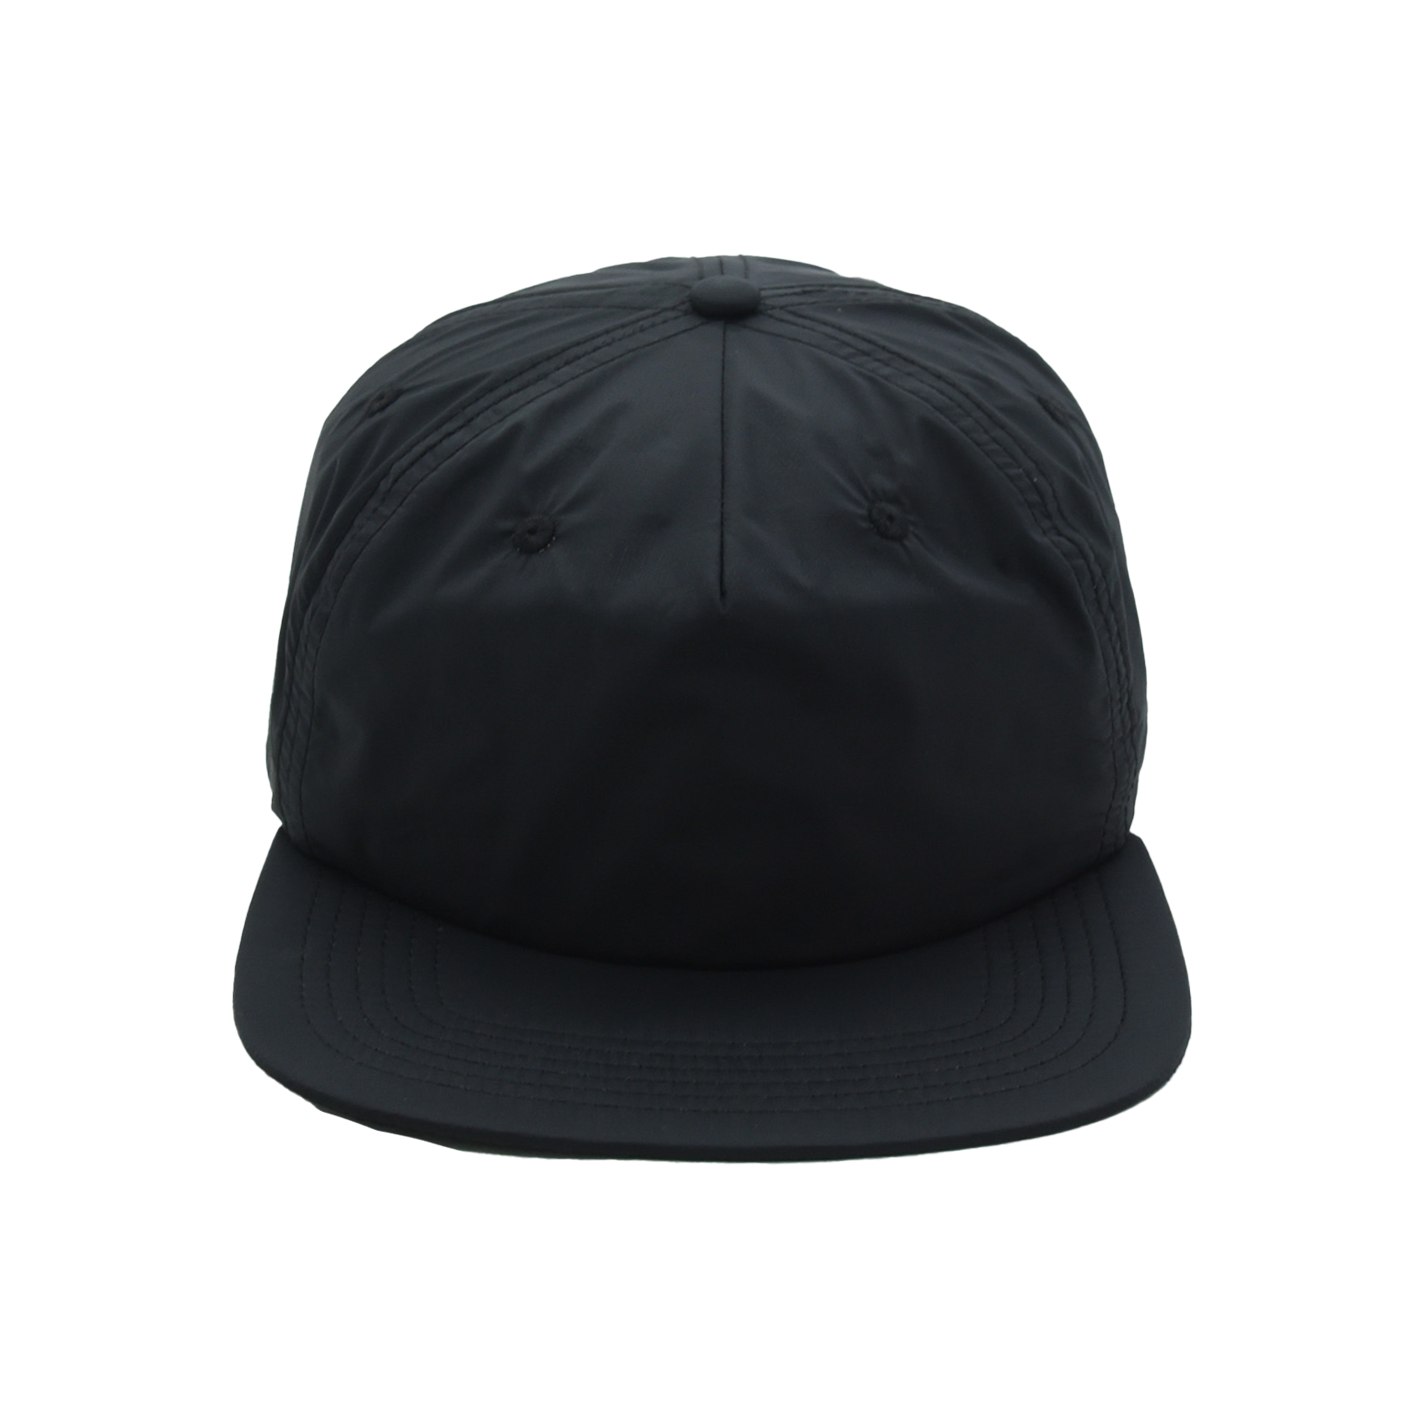 Black Nylon 5 panel snapback hat Blank - MFG Merch brand